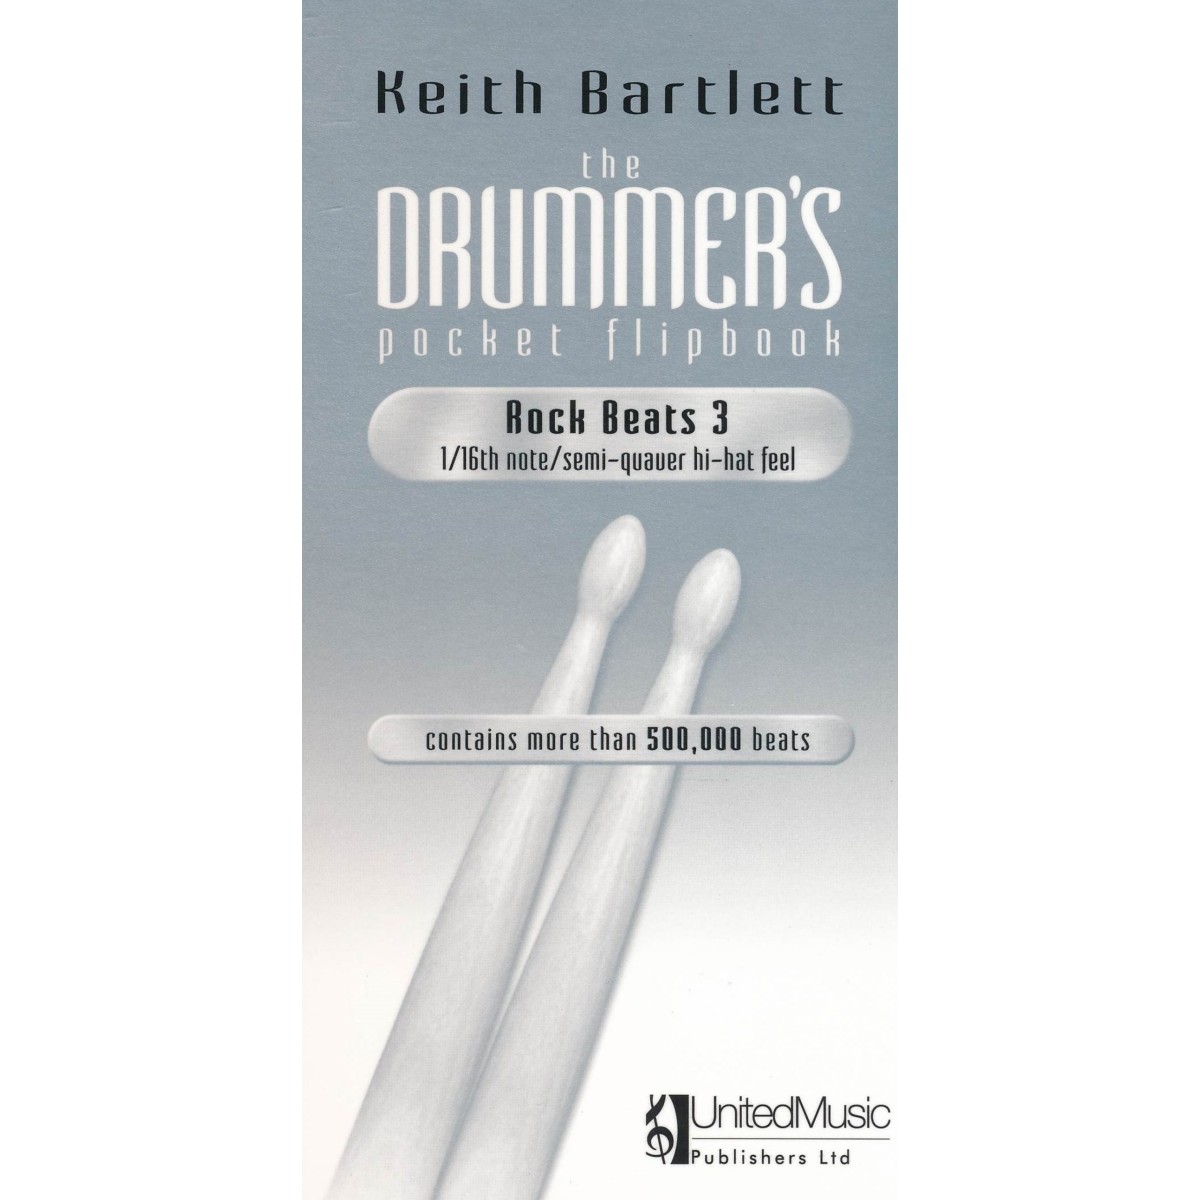 The Drummer's Pocket Flipbook - Rock Beats 3